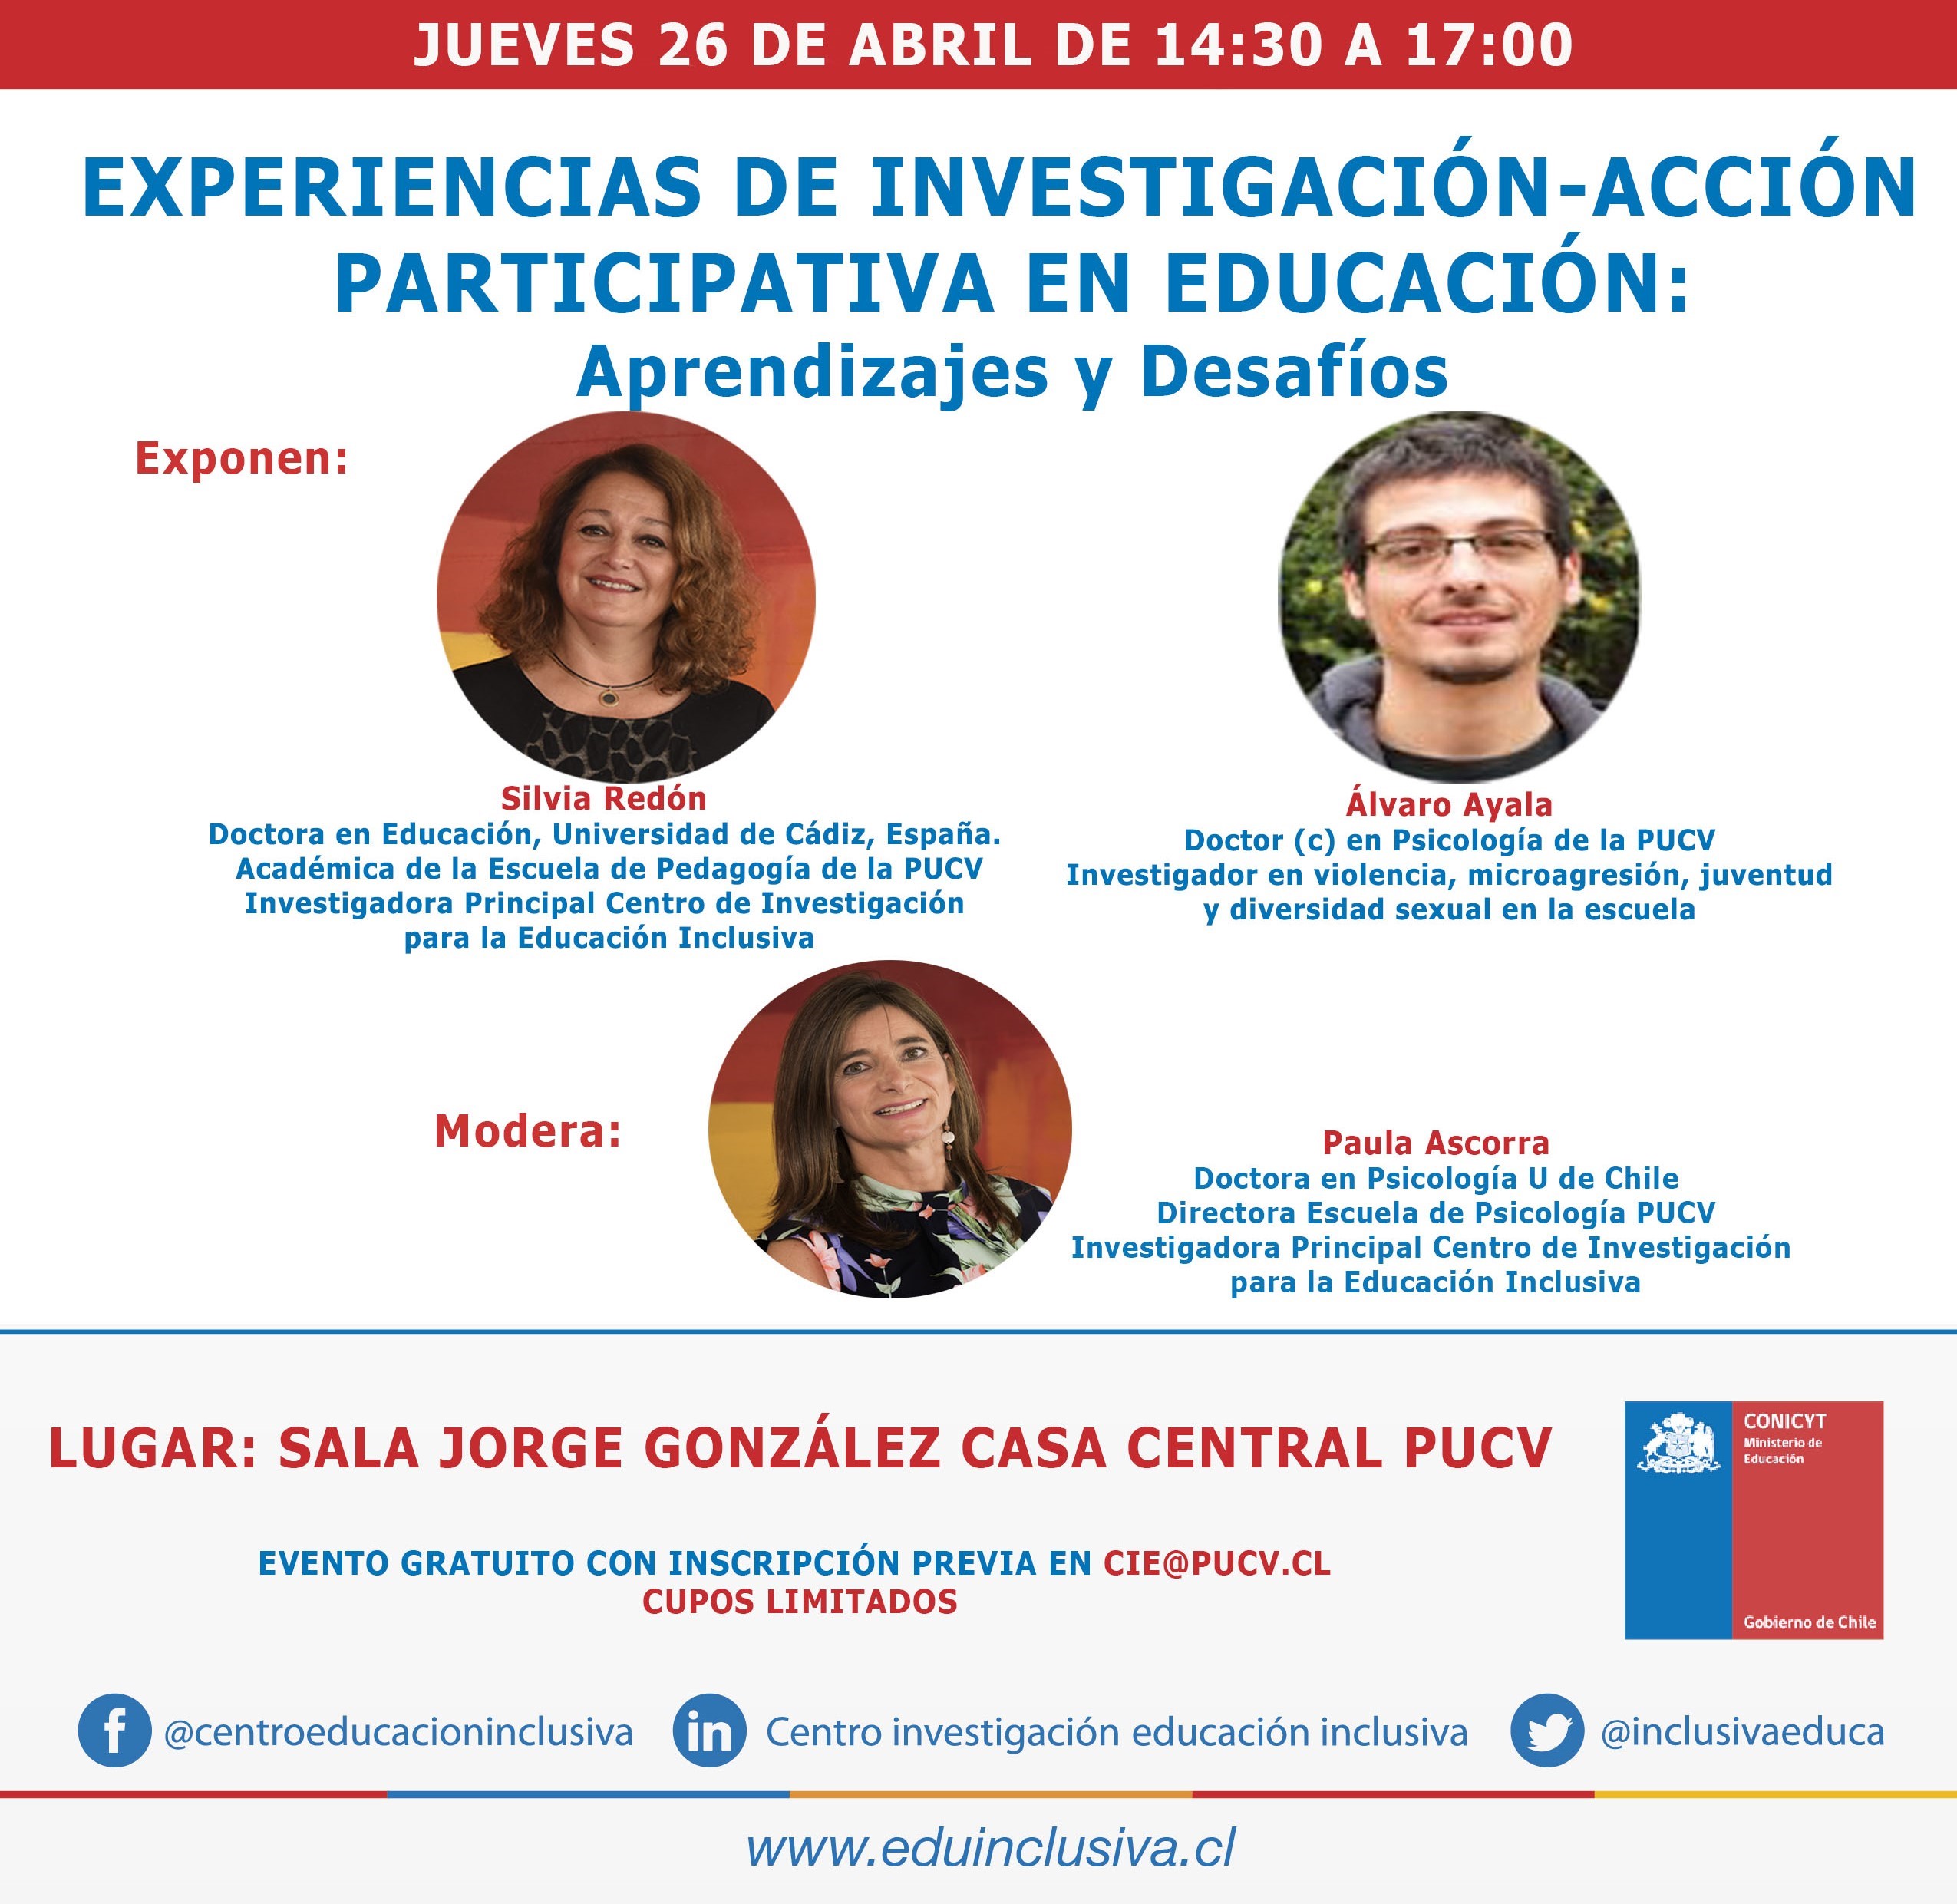 /CUPOS AGOTADOS/ Centro Eduinclusiva realiza Seminario sobre experiencias de investigación-acción participativa